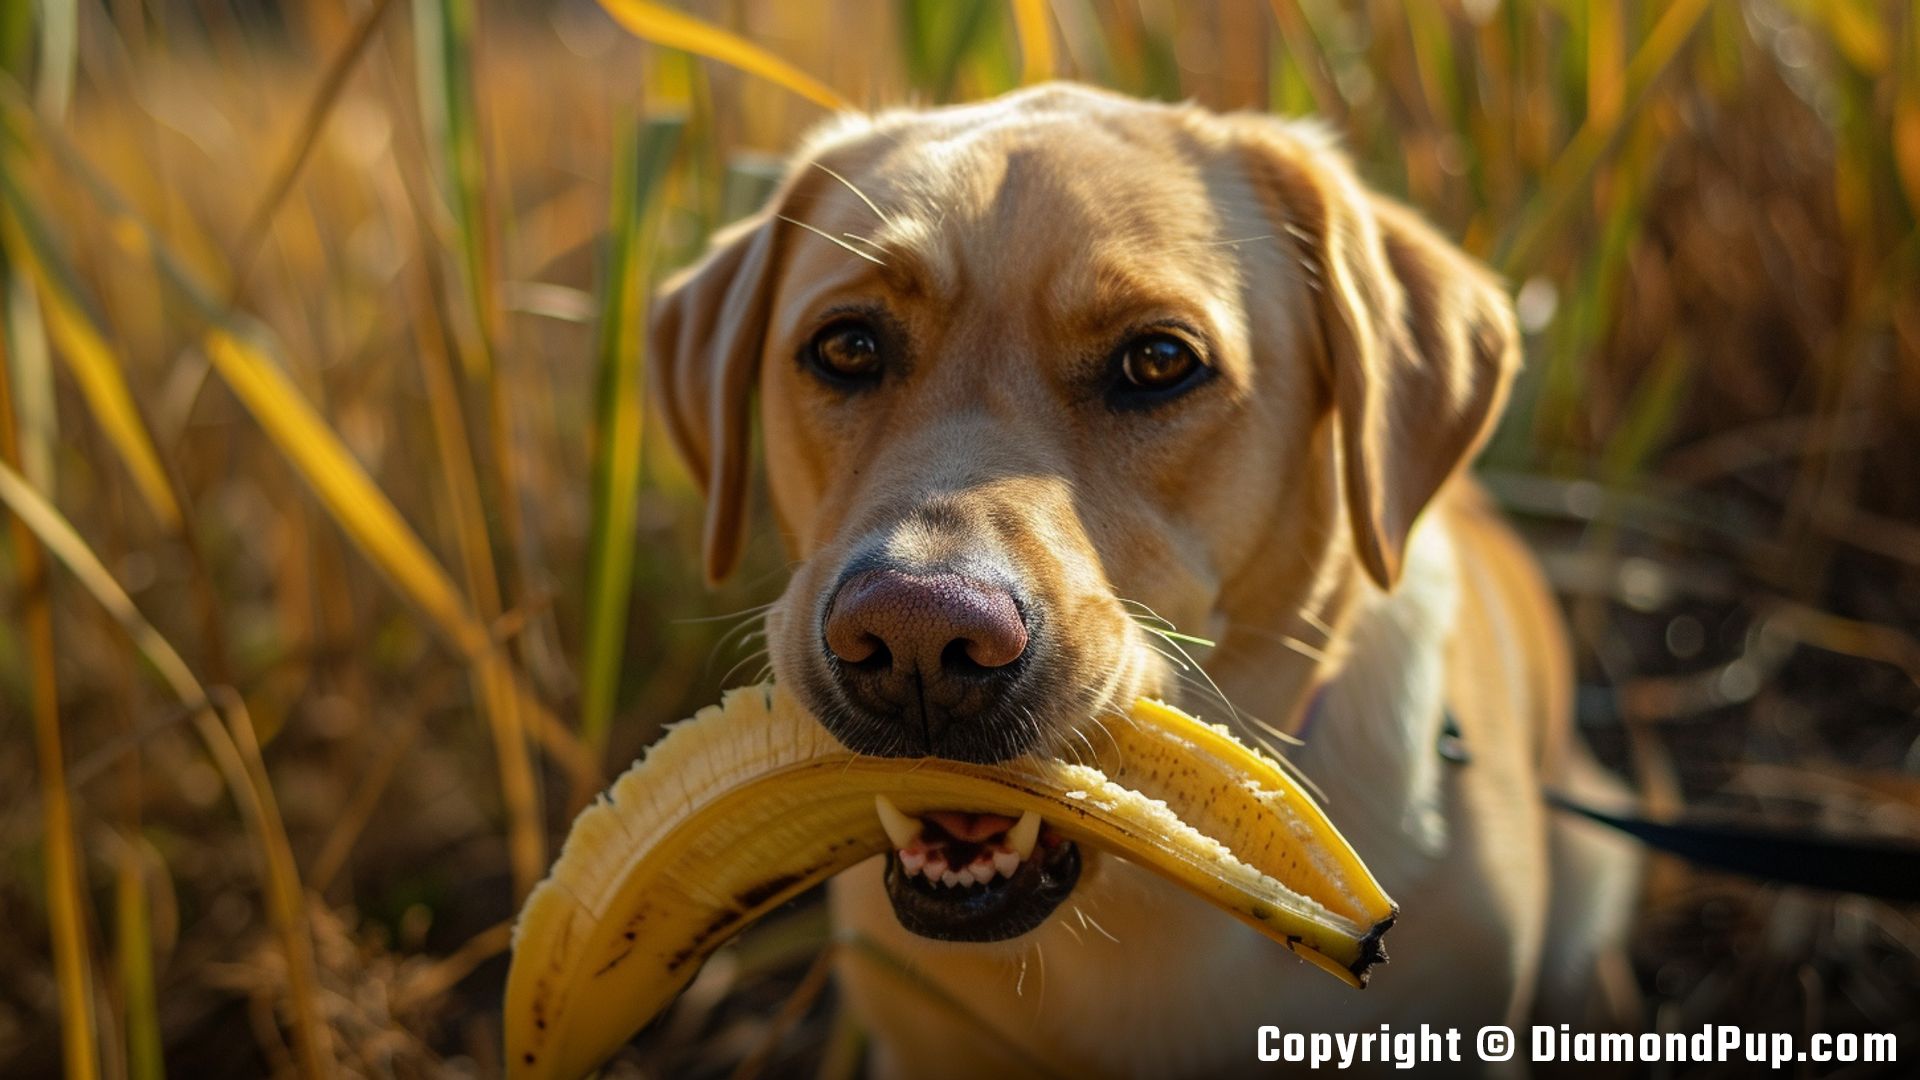 Image of a Cute Labrador Eating Banana